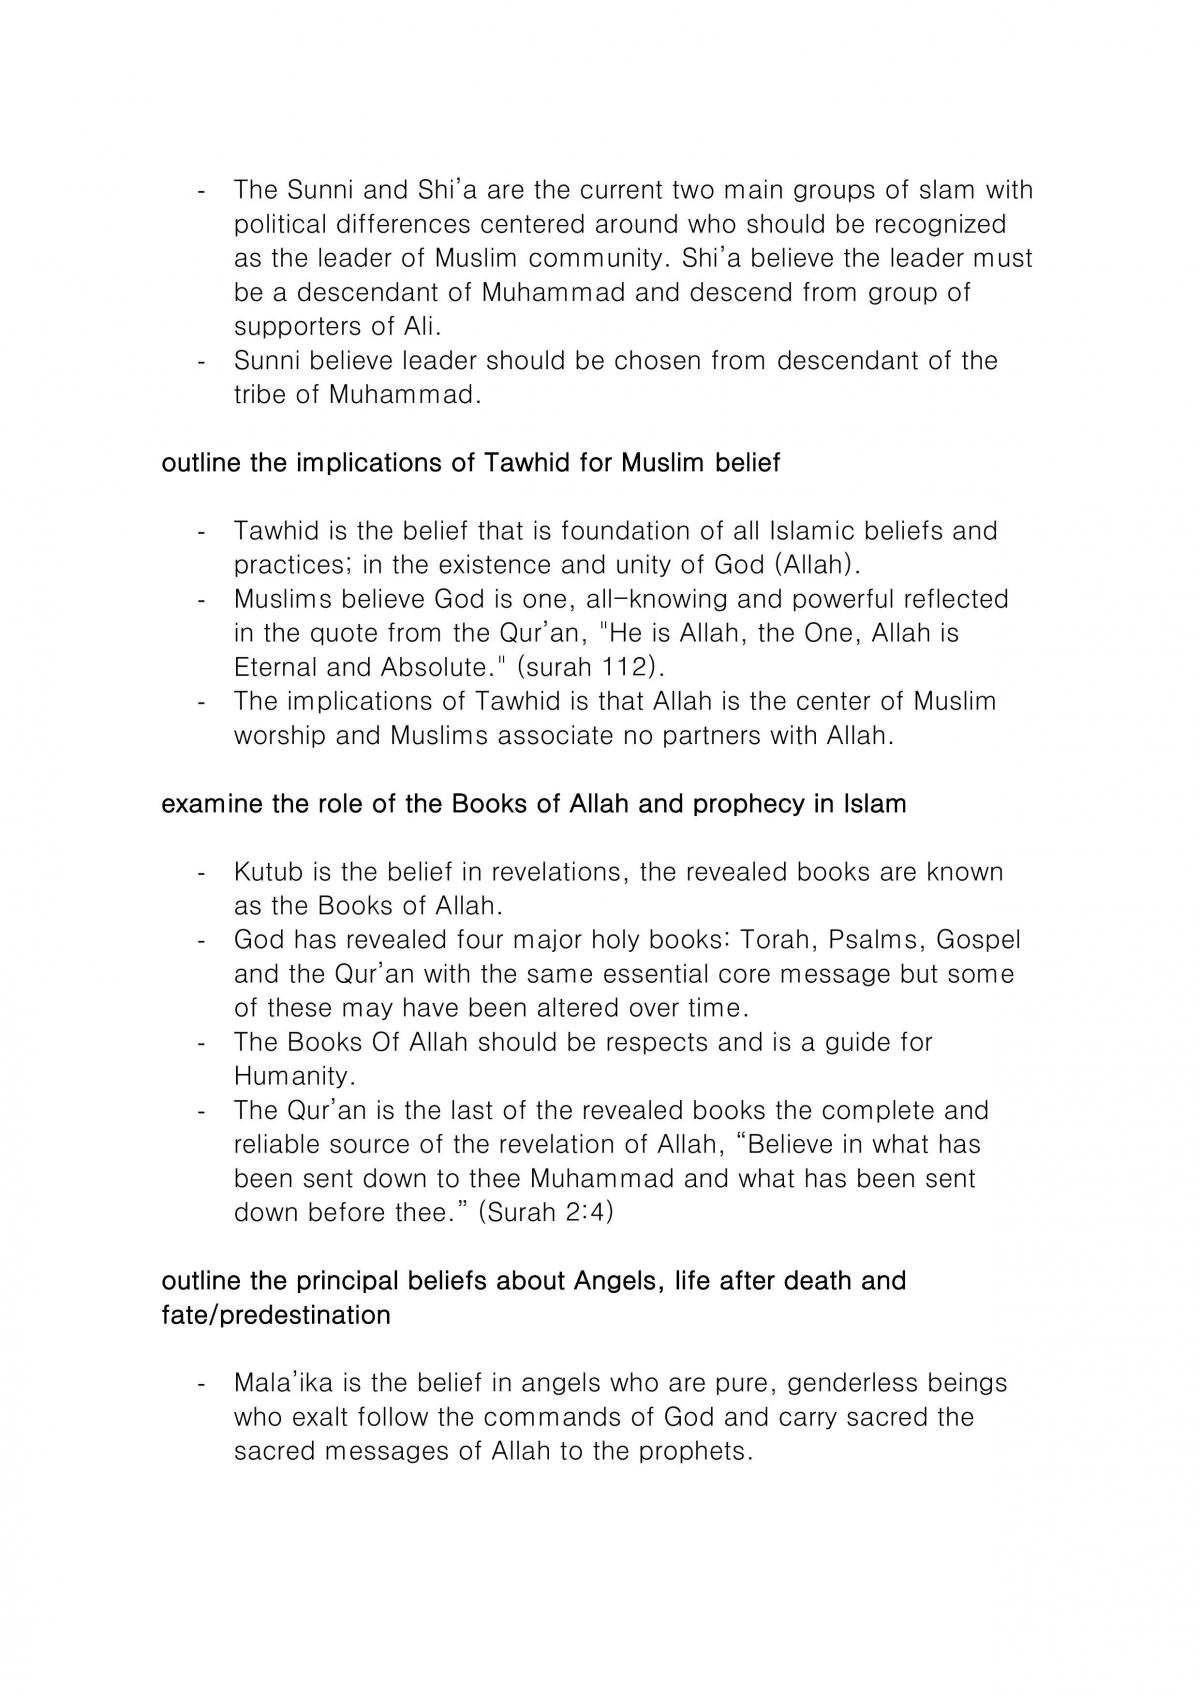 SOR II Full Syllabus Notes: Christianity, Islam, Judiasm - Page 10